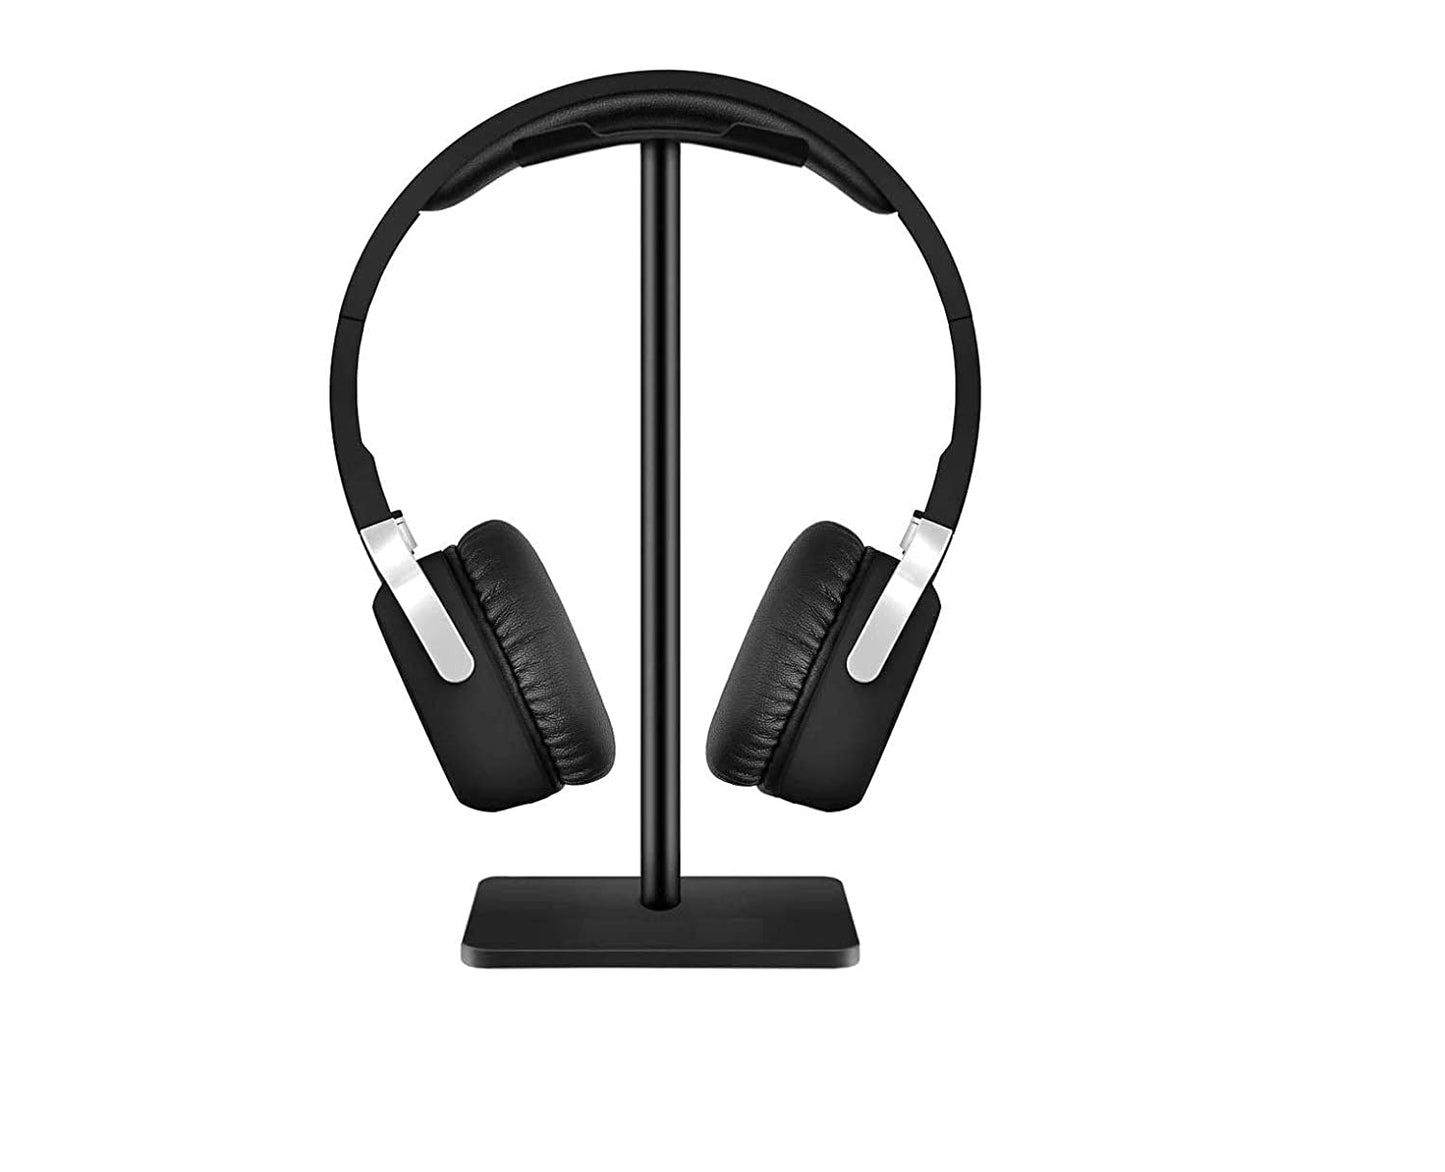 Headphone Stand Headphone Holder (Black) headphone accessories- #Royalkart#black headphone stand